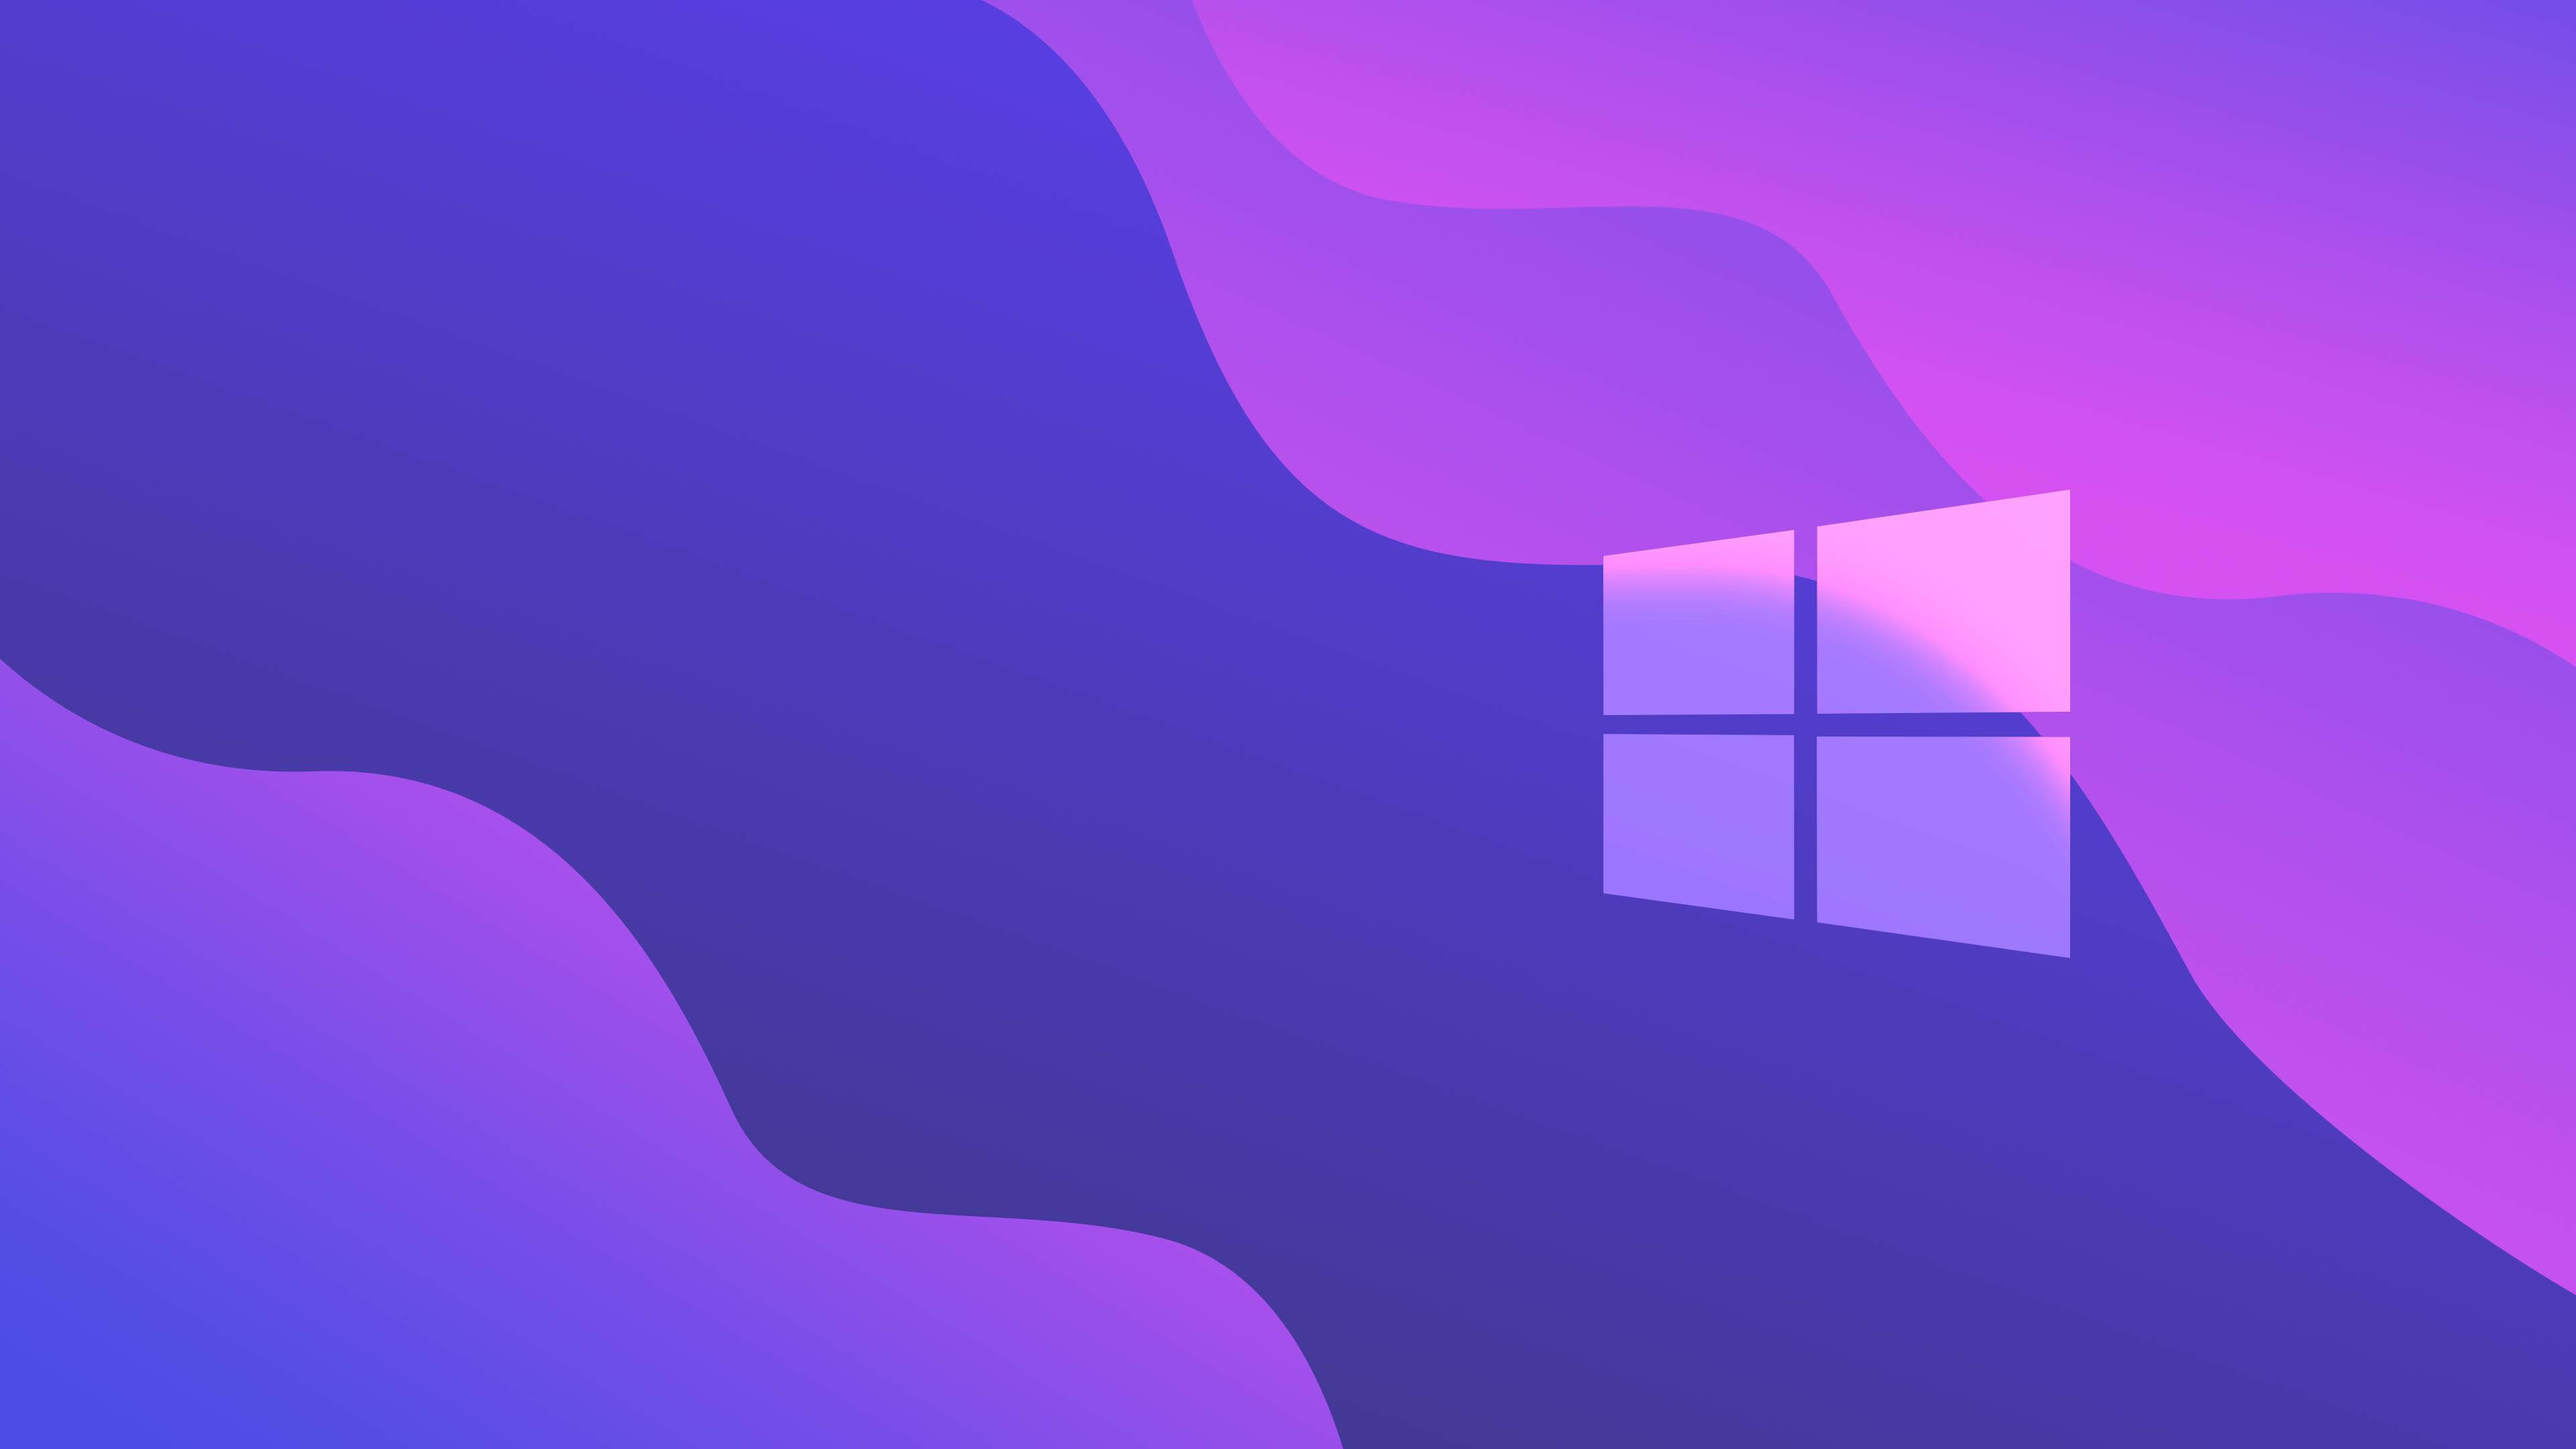 10 wallpaper Windows 8 cực đẹp  HANDHELD VIETNAM